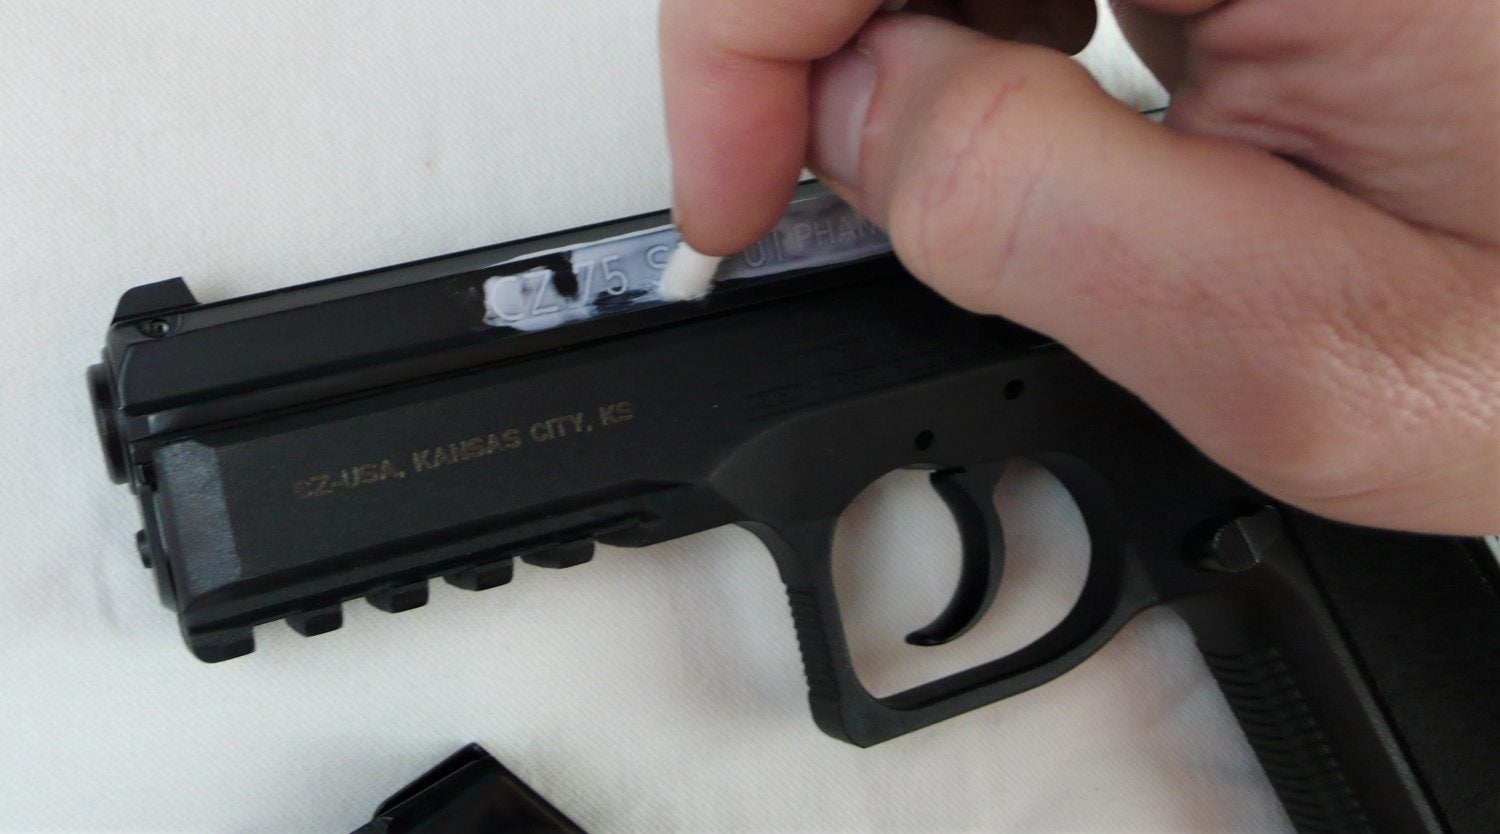 Fingernail polish on guns?